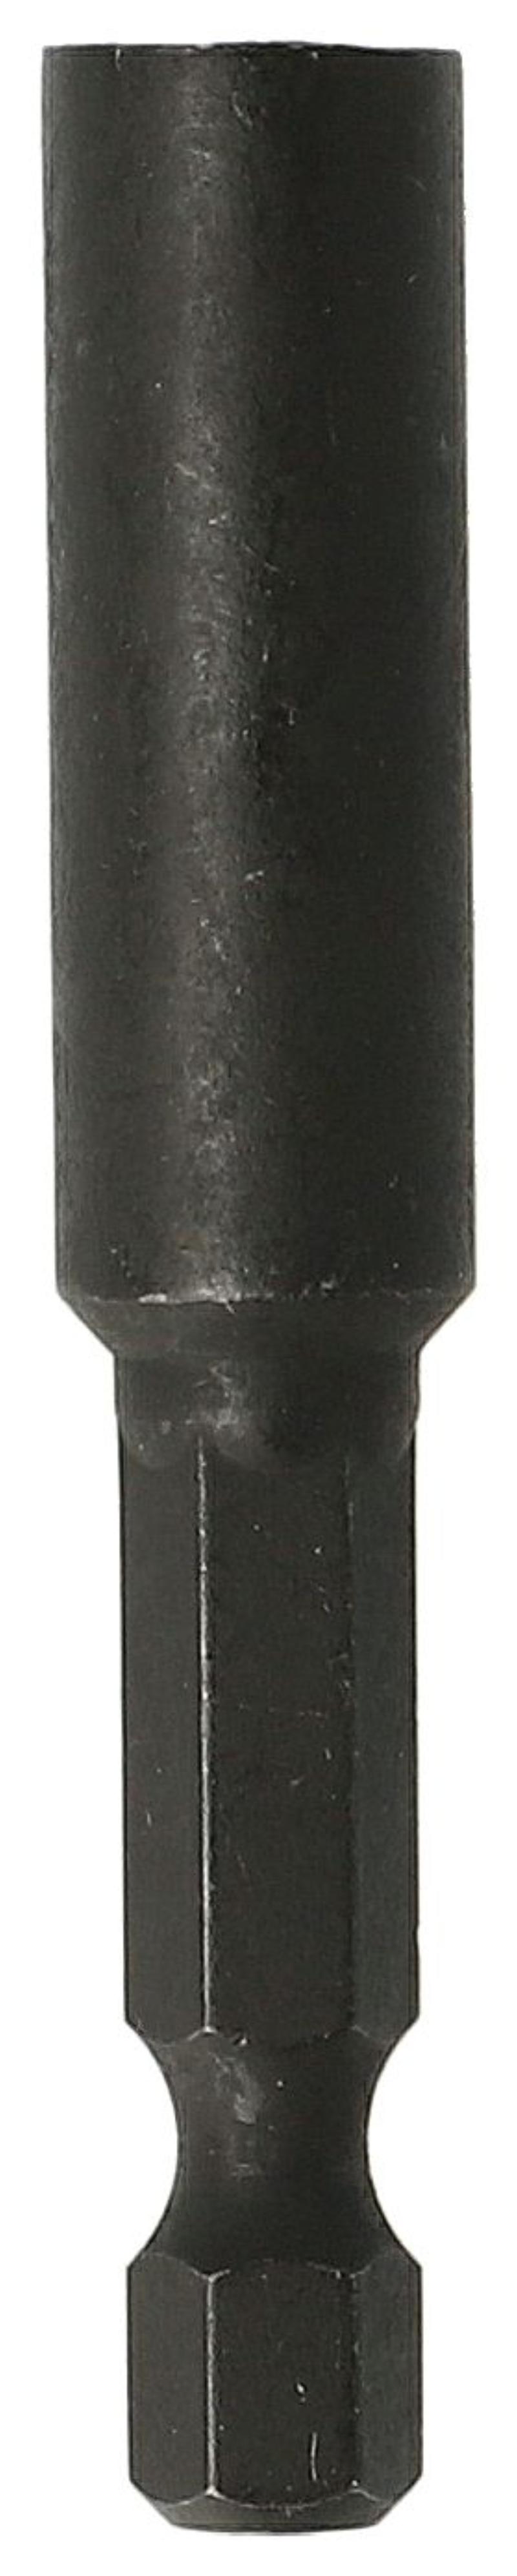 Heller Bithalter 60mm, magnetisch